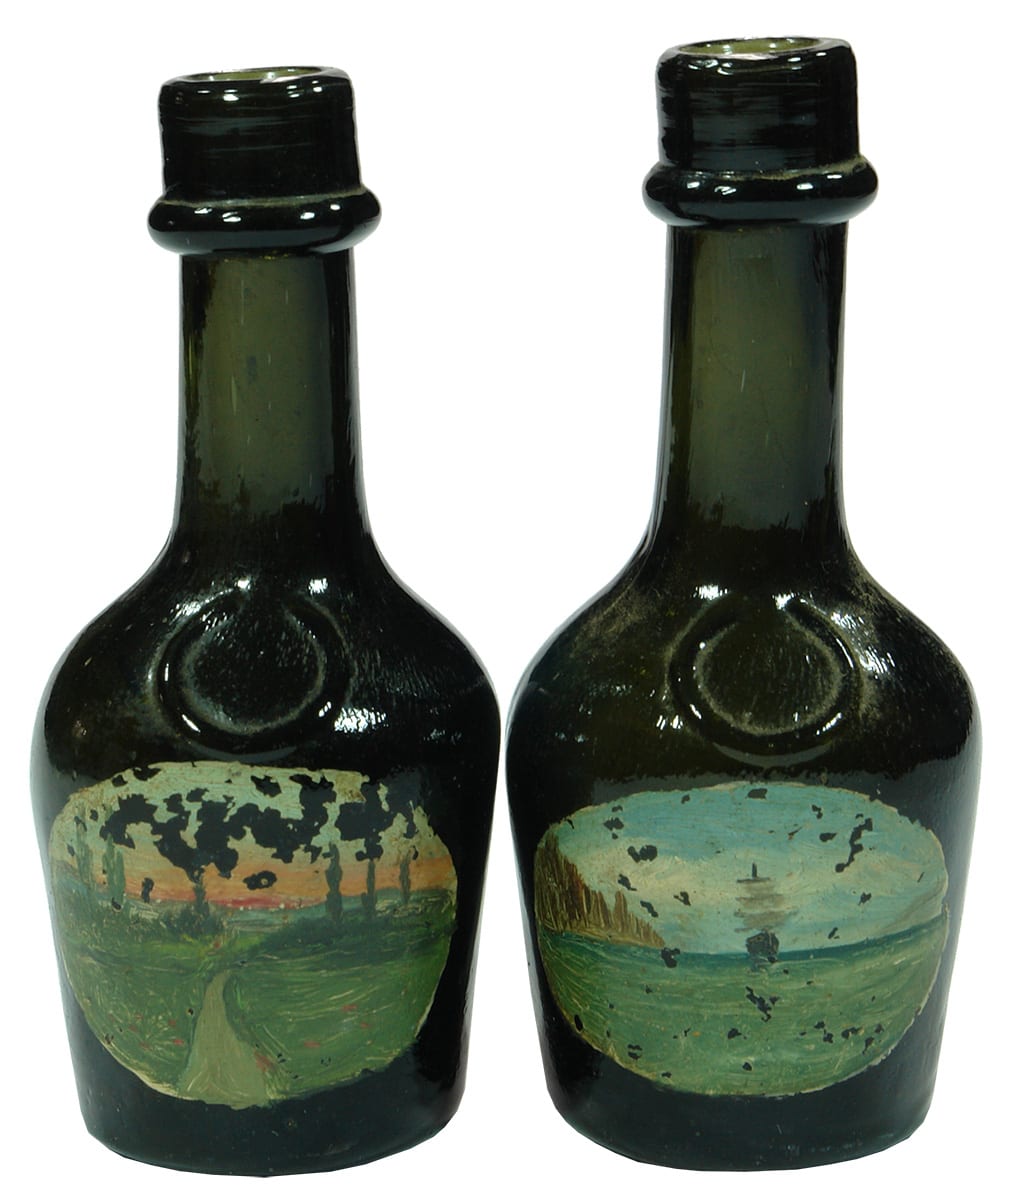 Sample Benedictine Bottles Painted Scenes